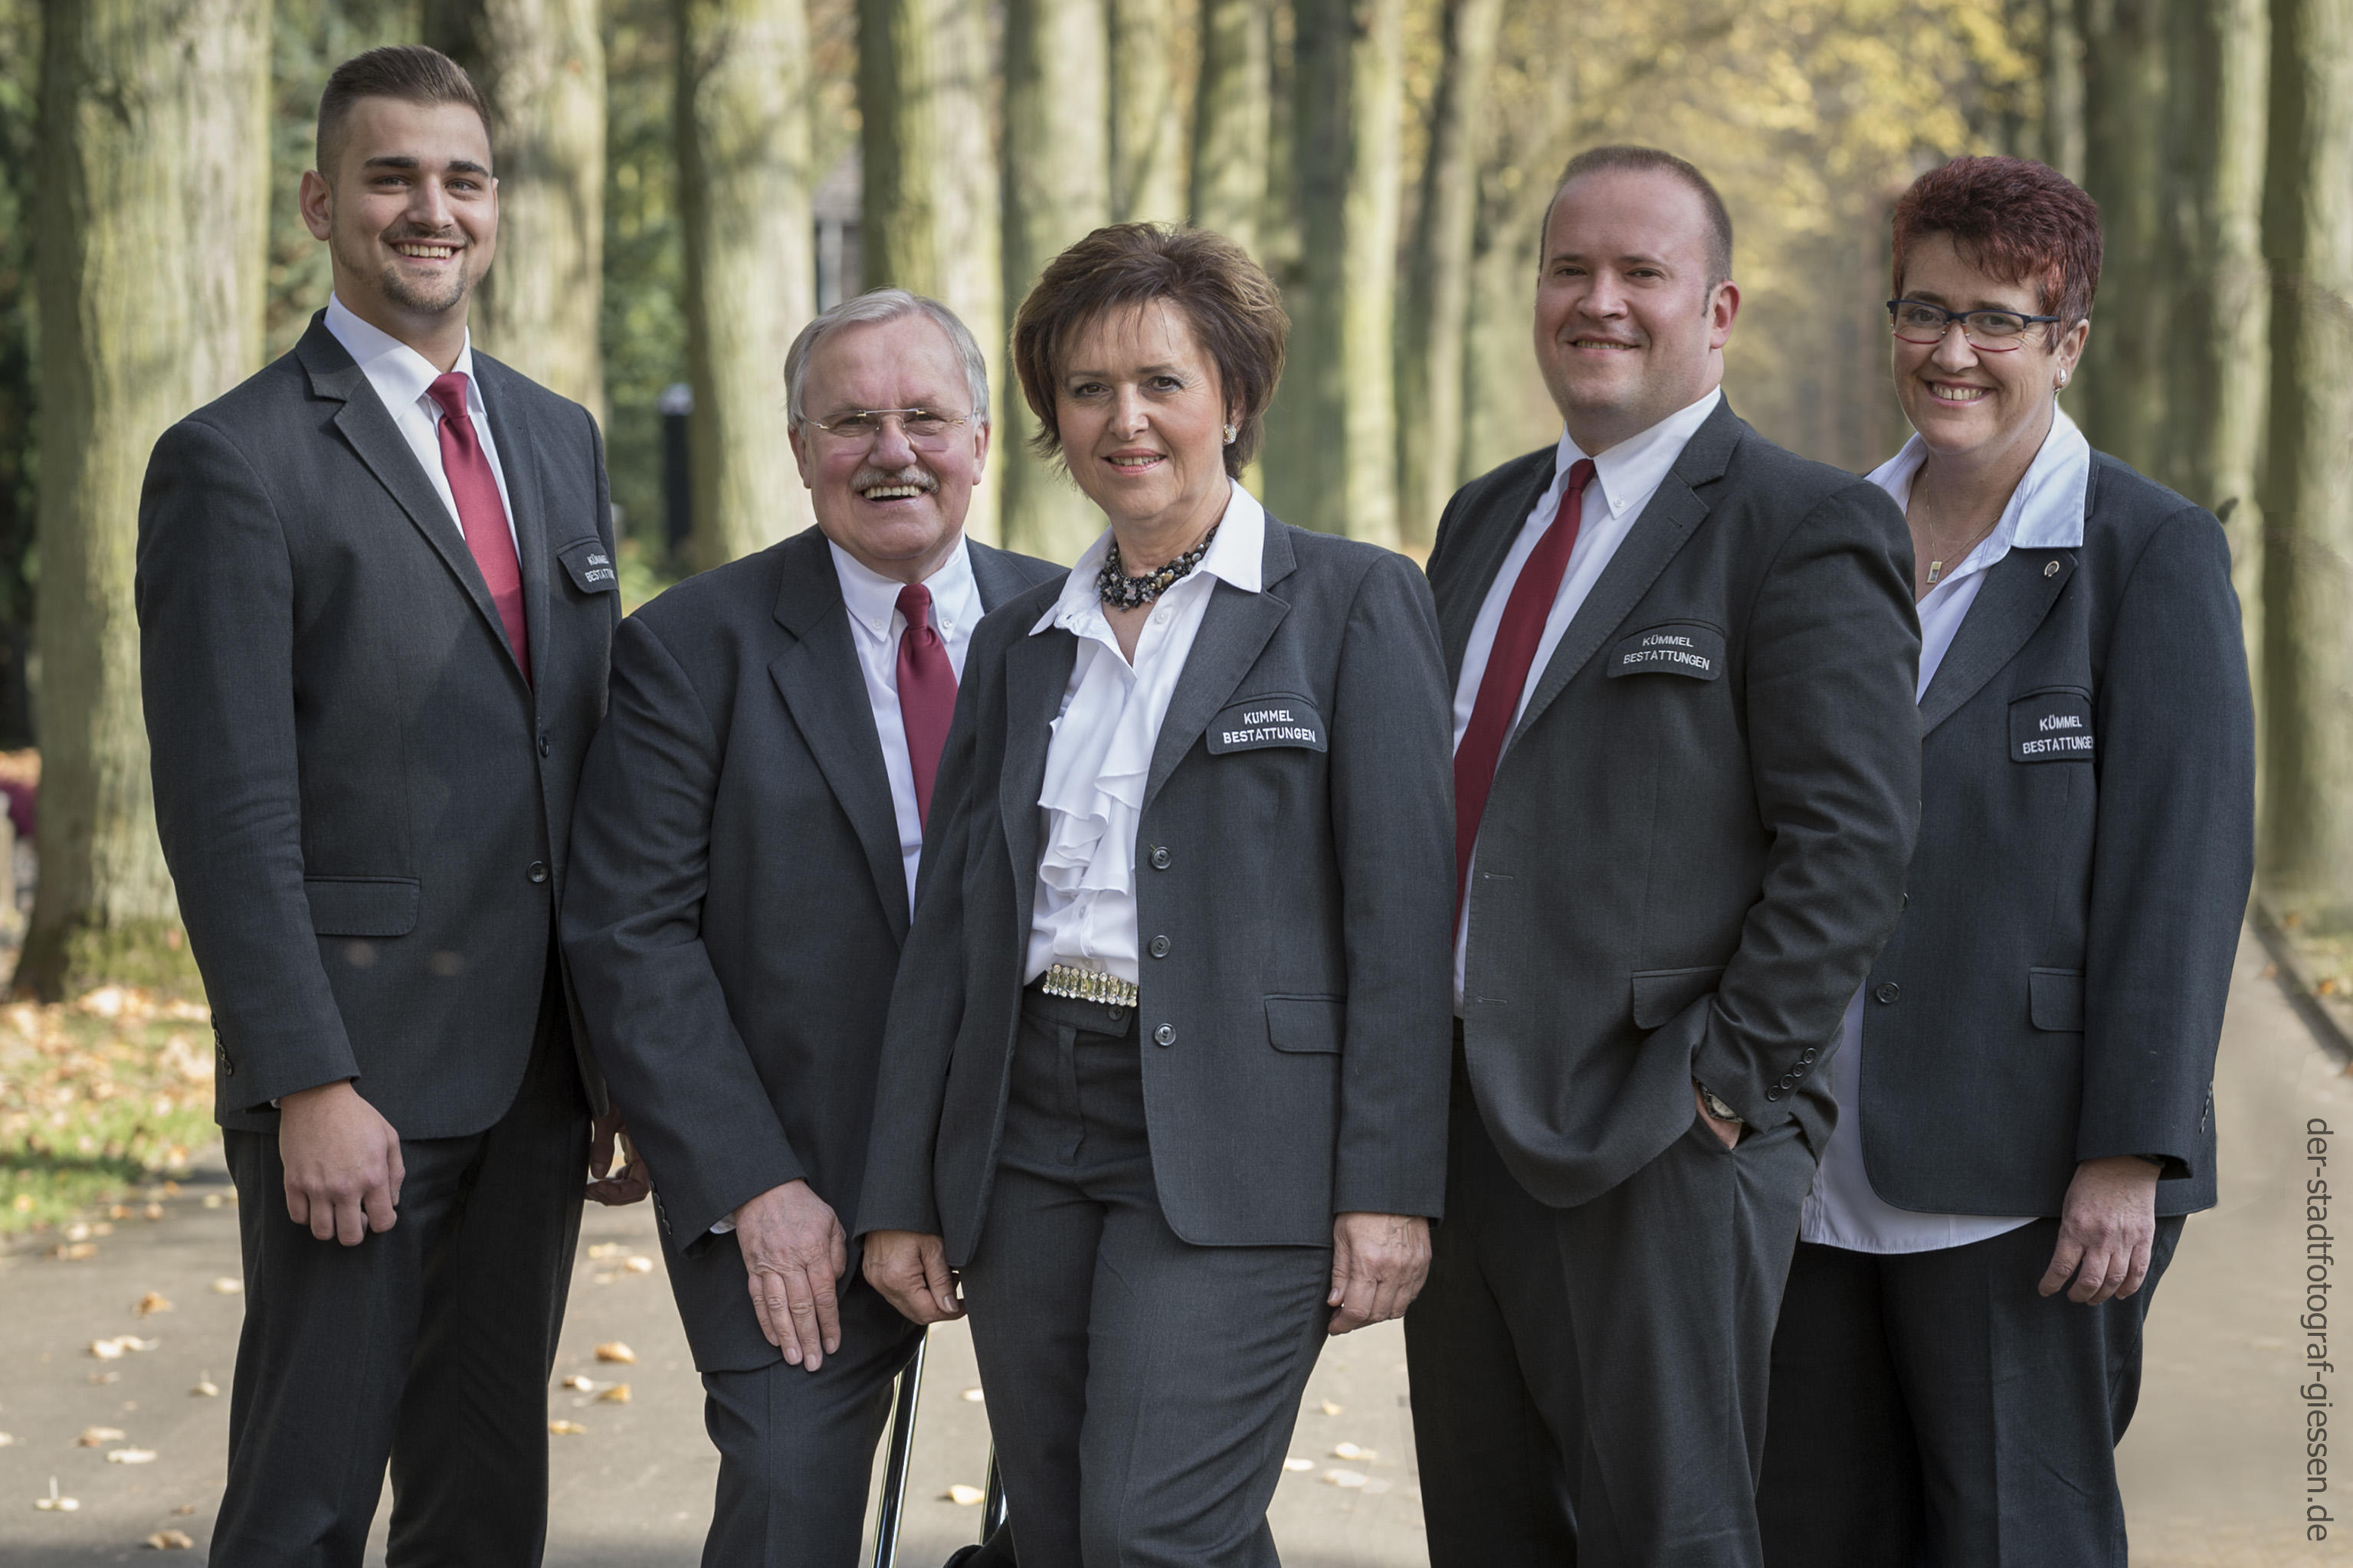 Unser Team von links nach rechts:
Daniel Reis, Hans-Eberhard Kümmel, Maria Kümmel, Sascha Kümmel, Sabine Klos